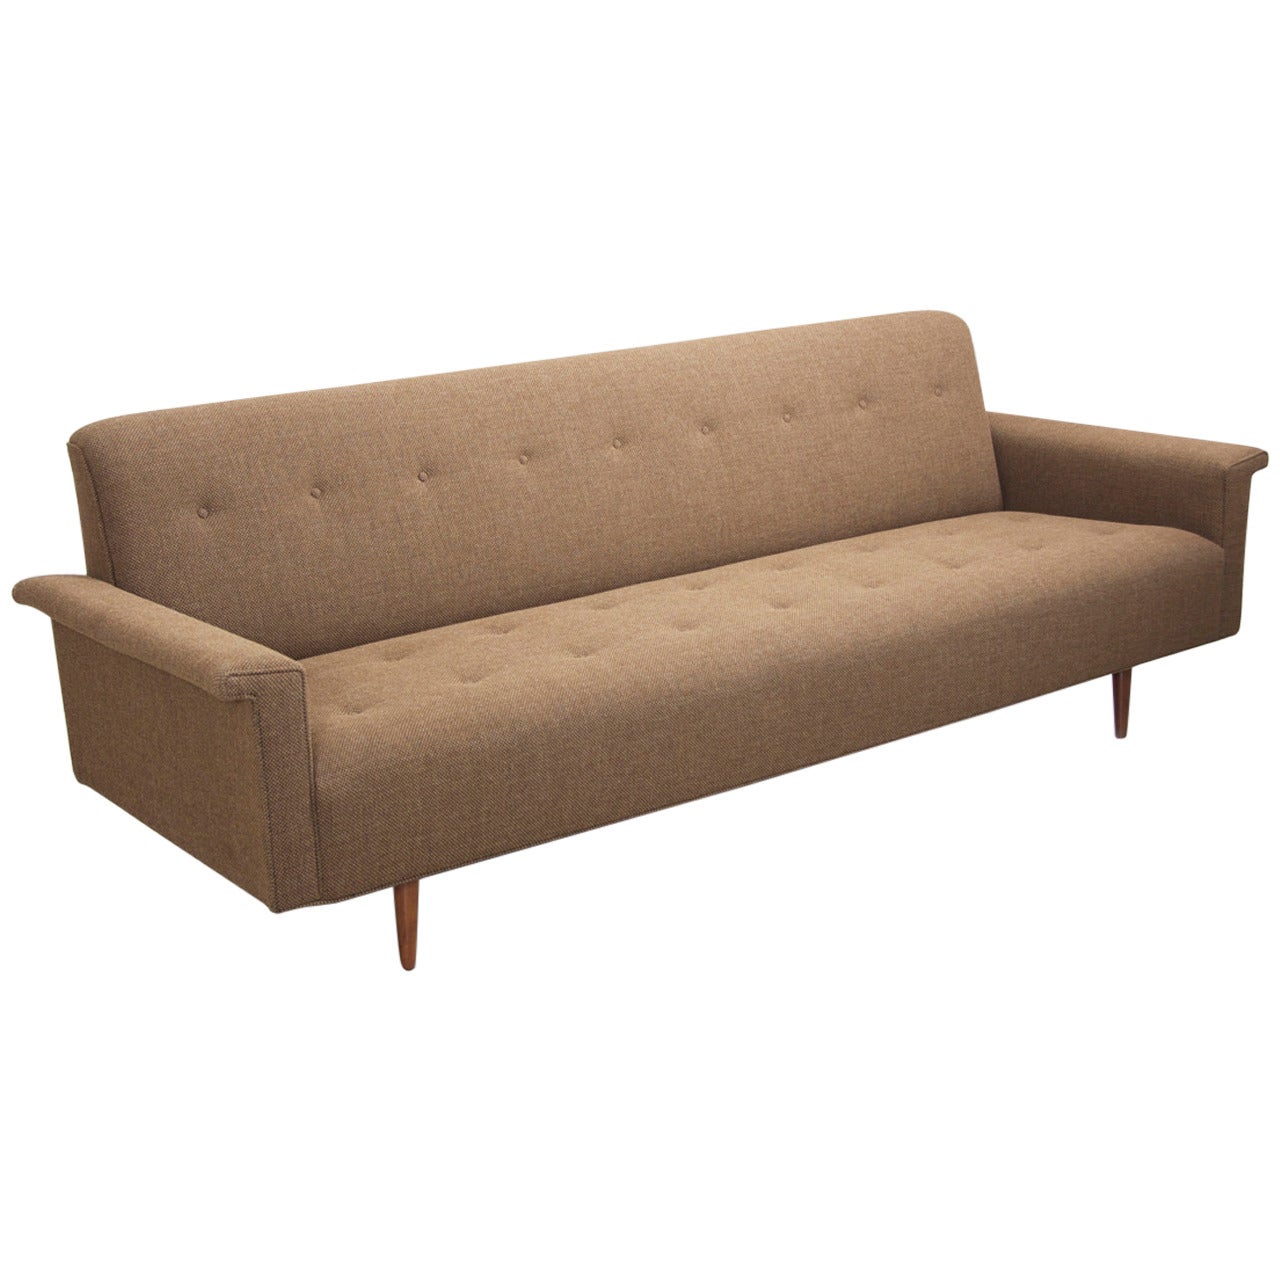 Elegant Milo Baughman Sofa in Brown or Green by Thayer Coggin For Sale